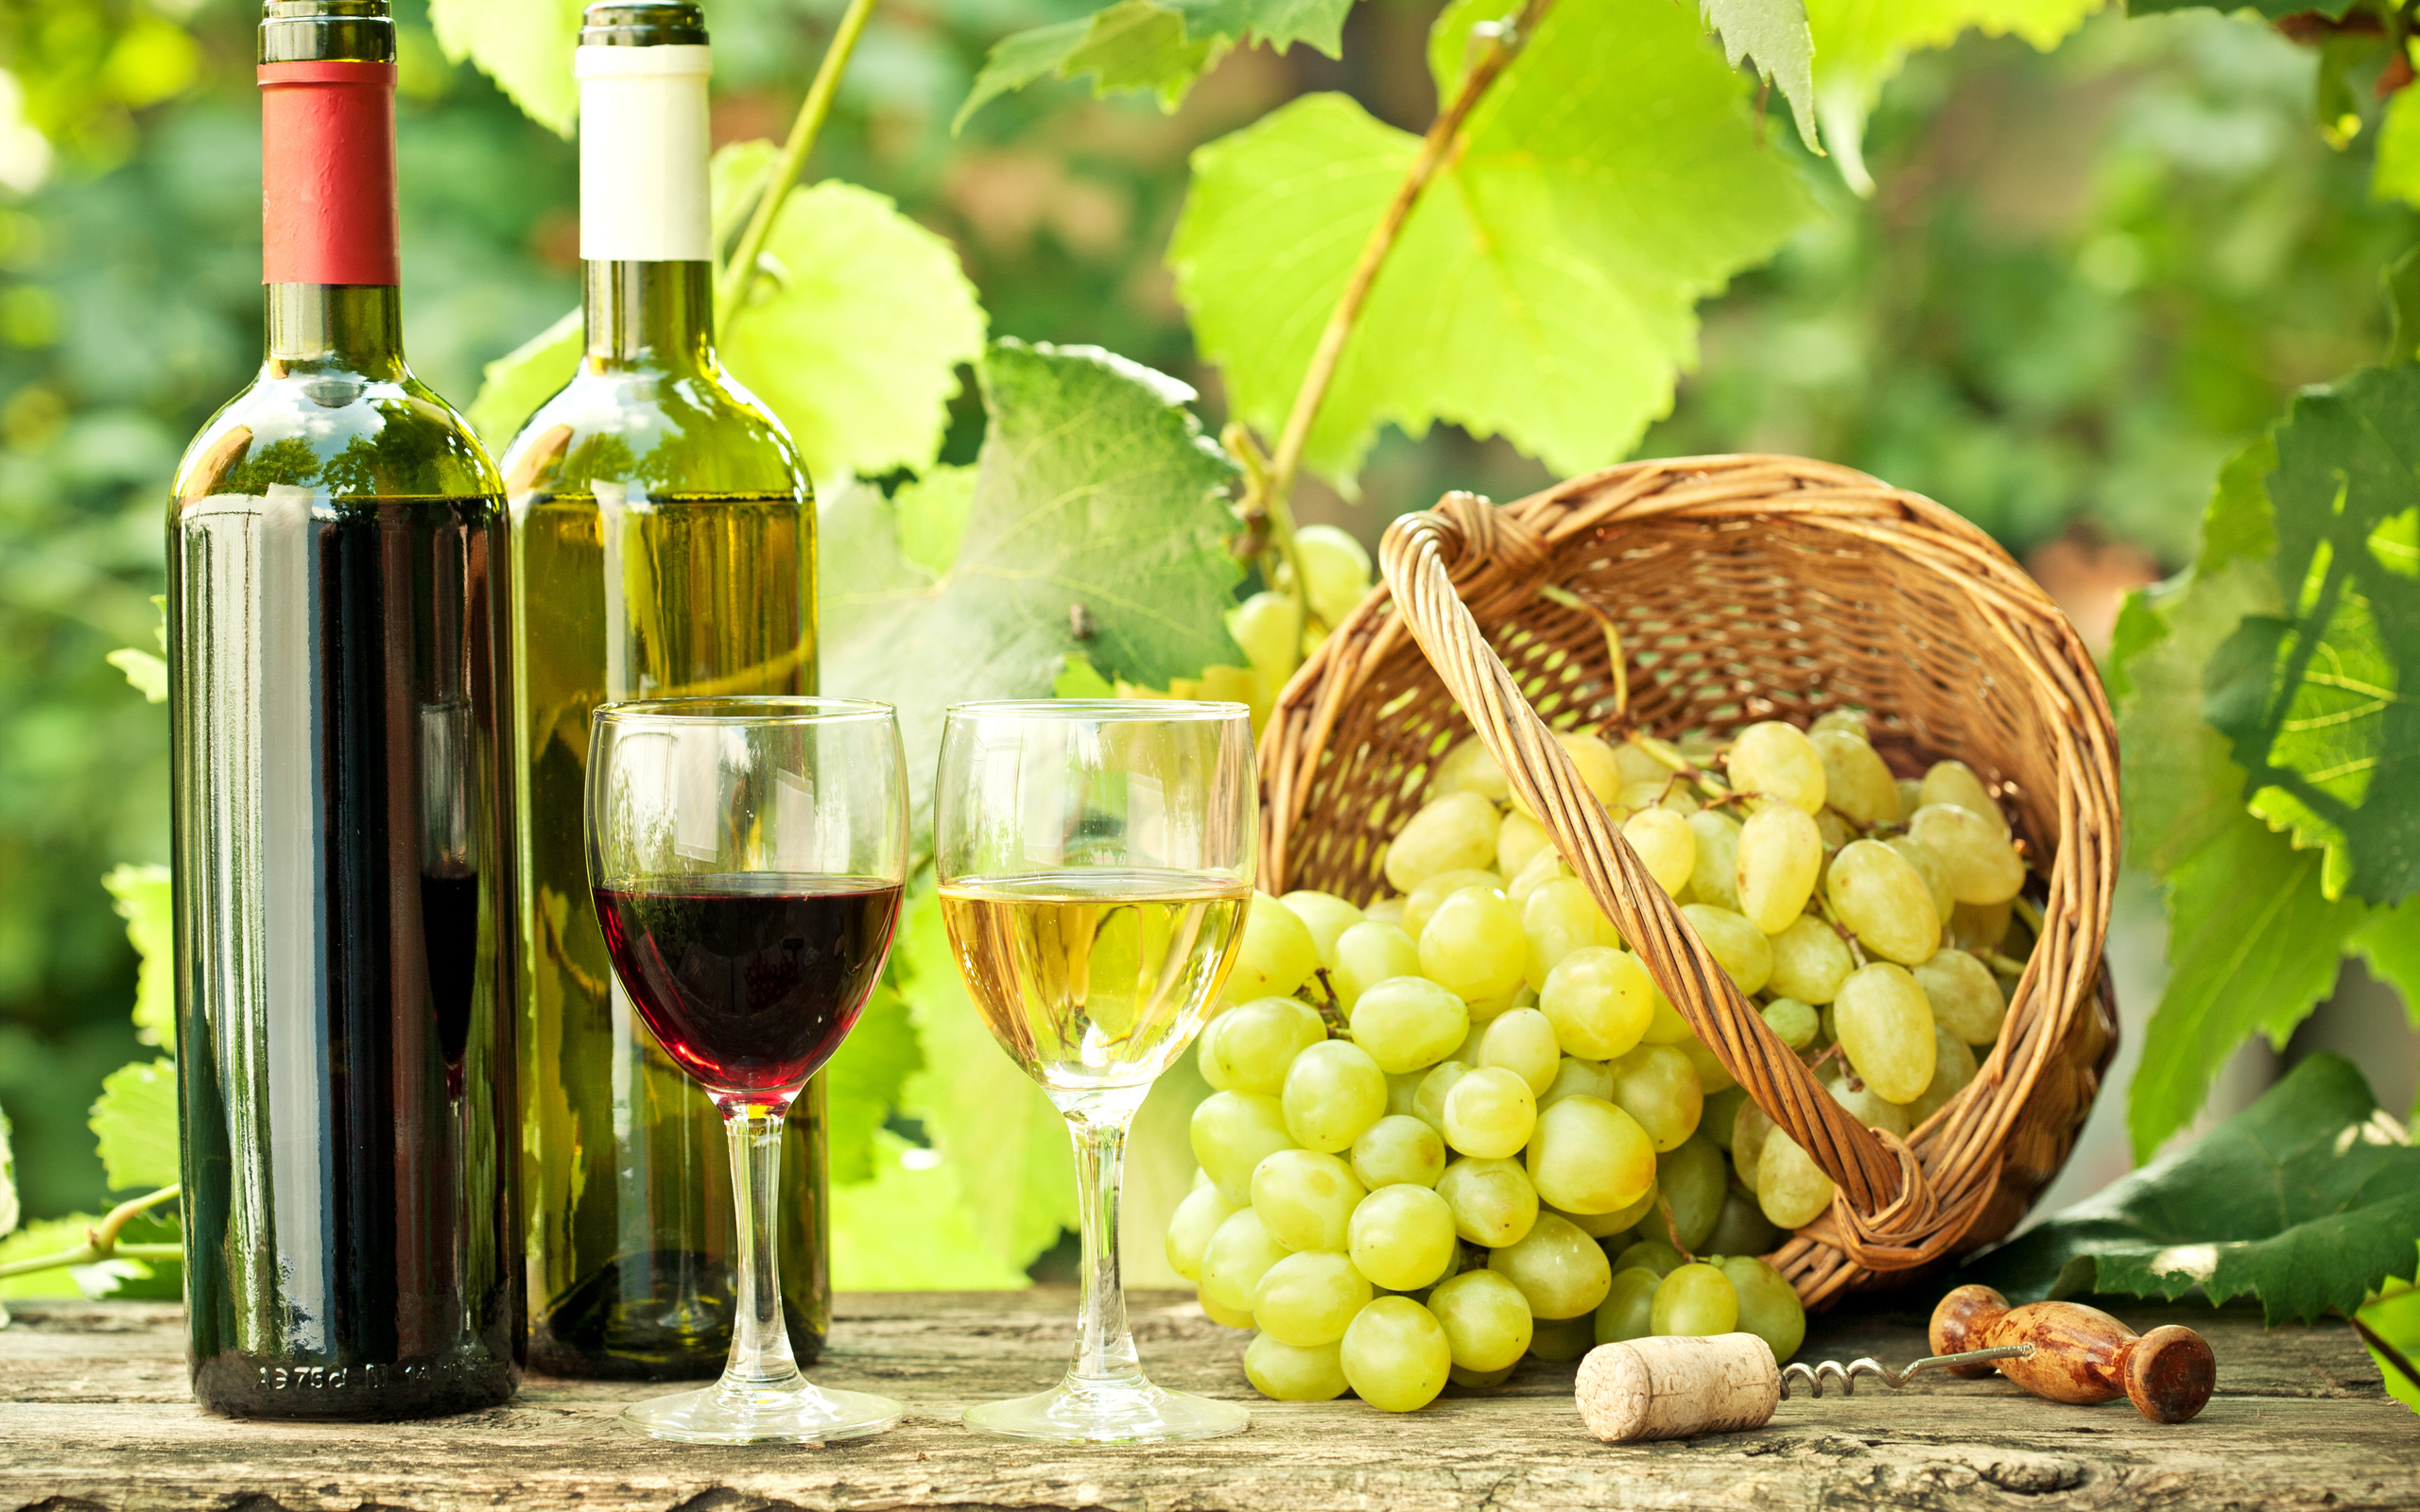 Grapes Basket And Wine Bottles